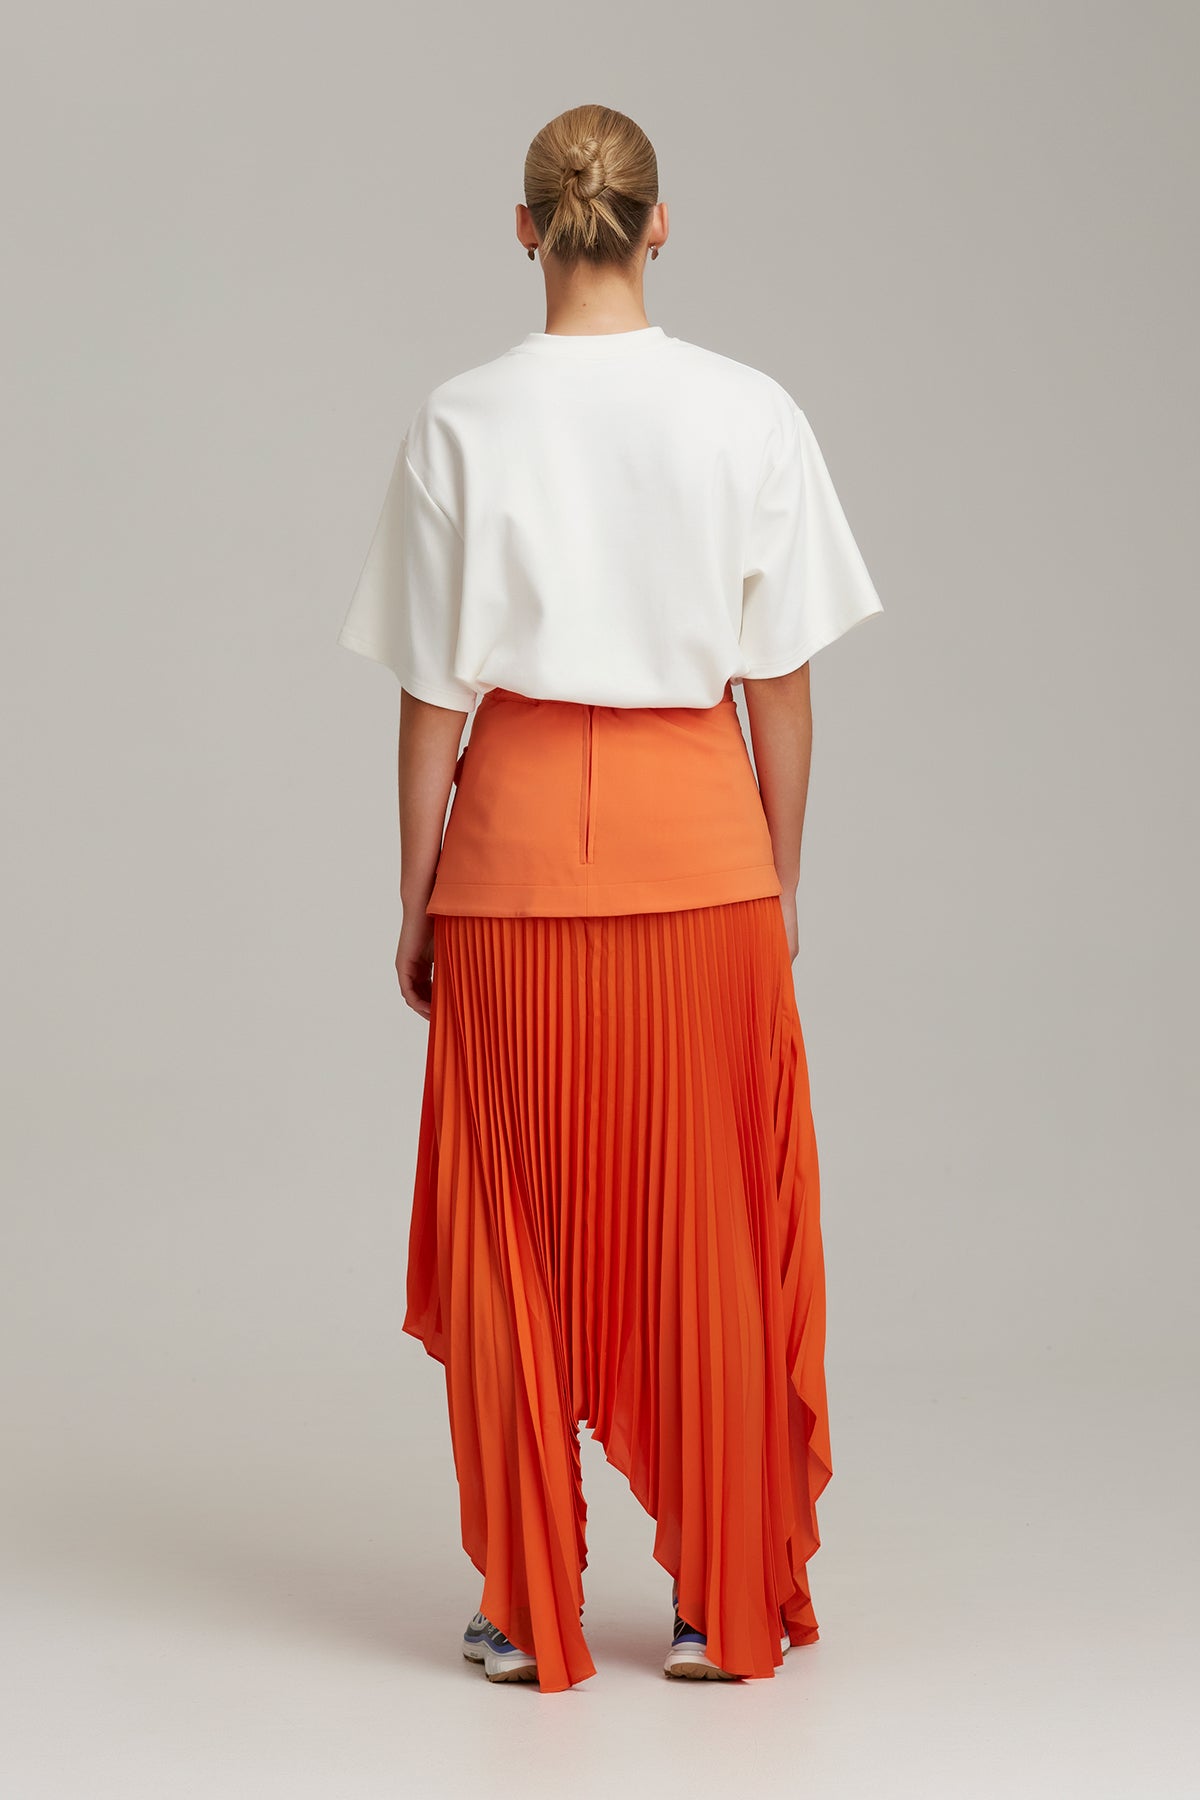 C/MEO Collective - Constant Progressive Skirt - Tangerine